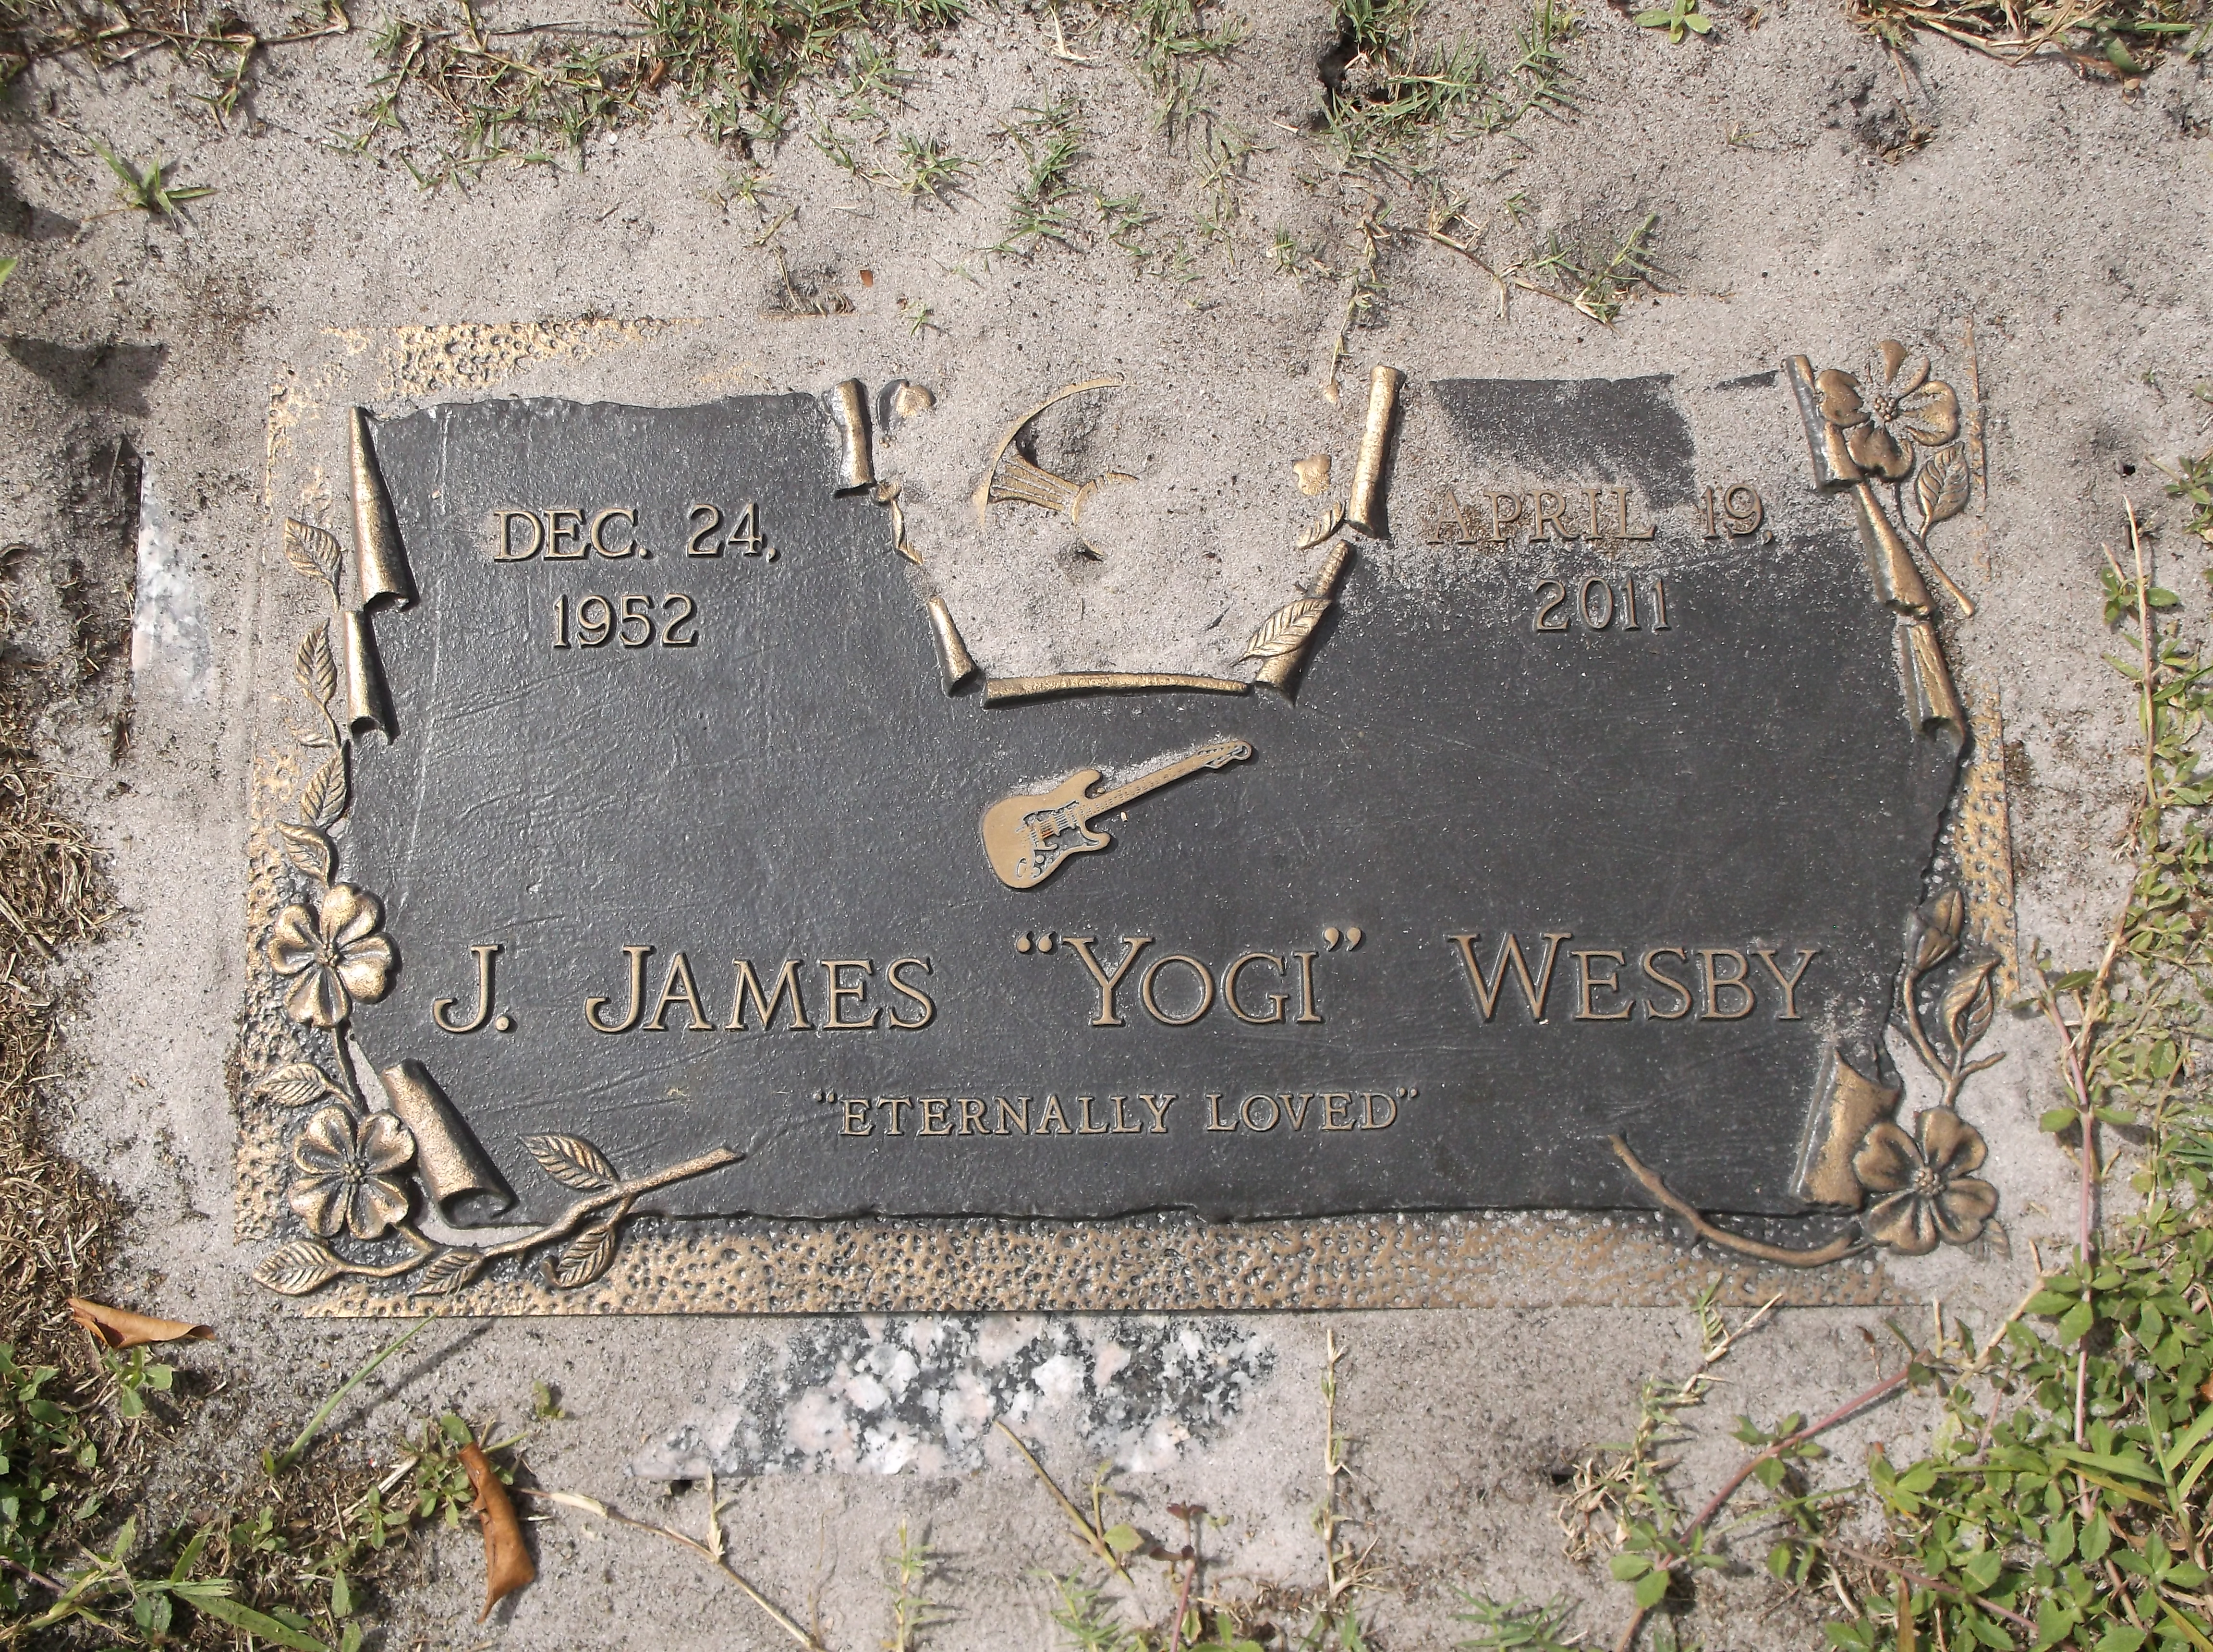 J James "Yogi" Wesby